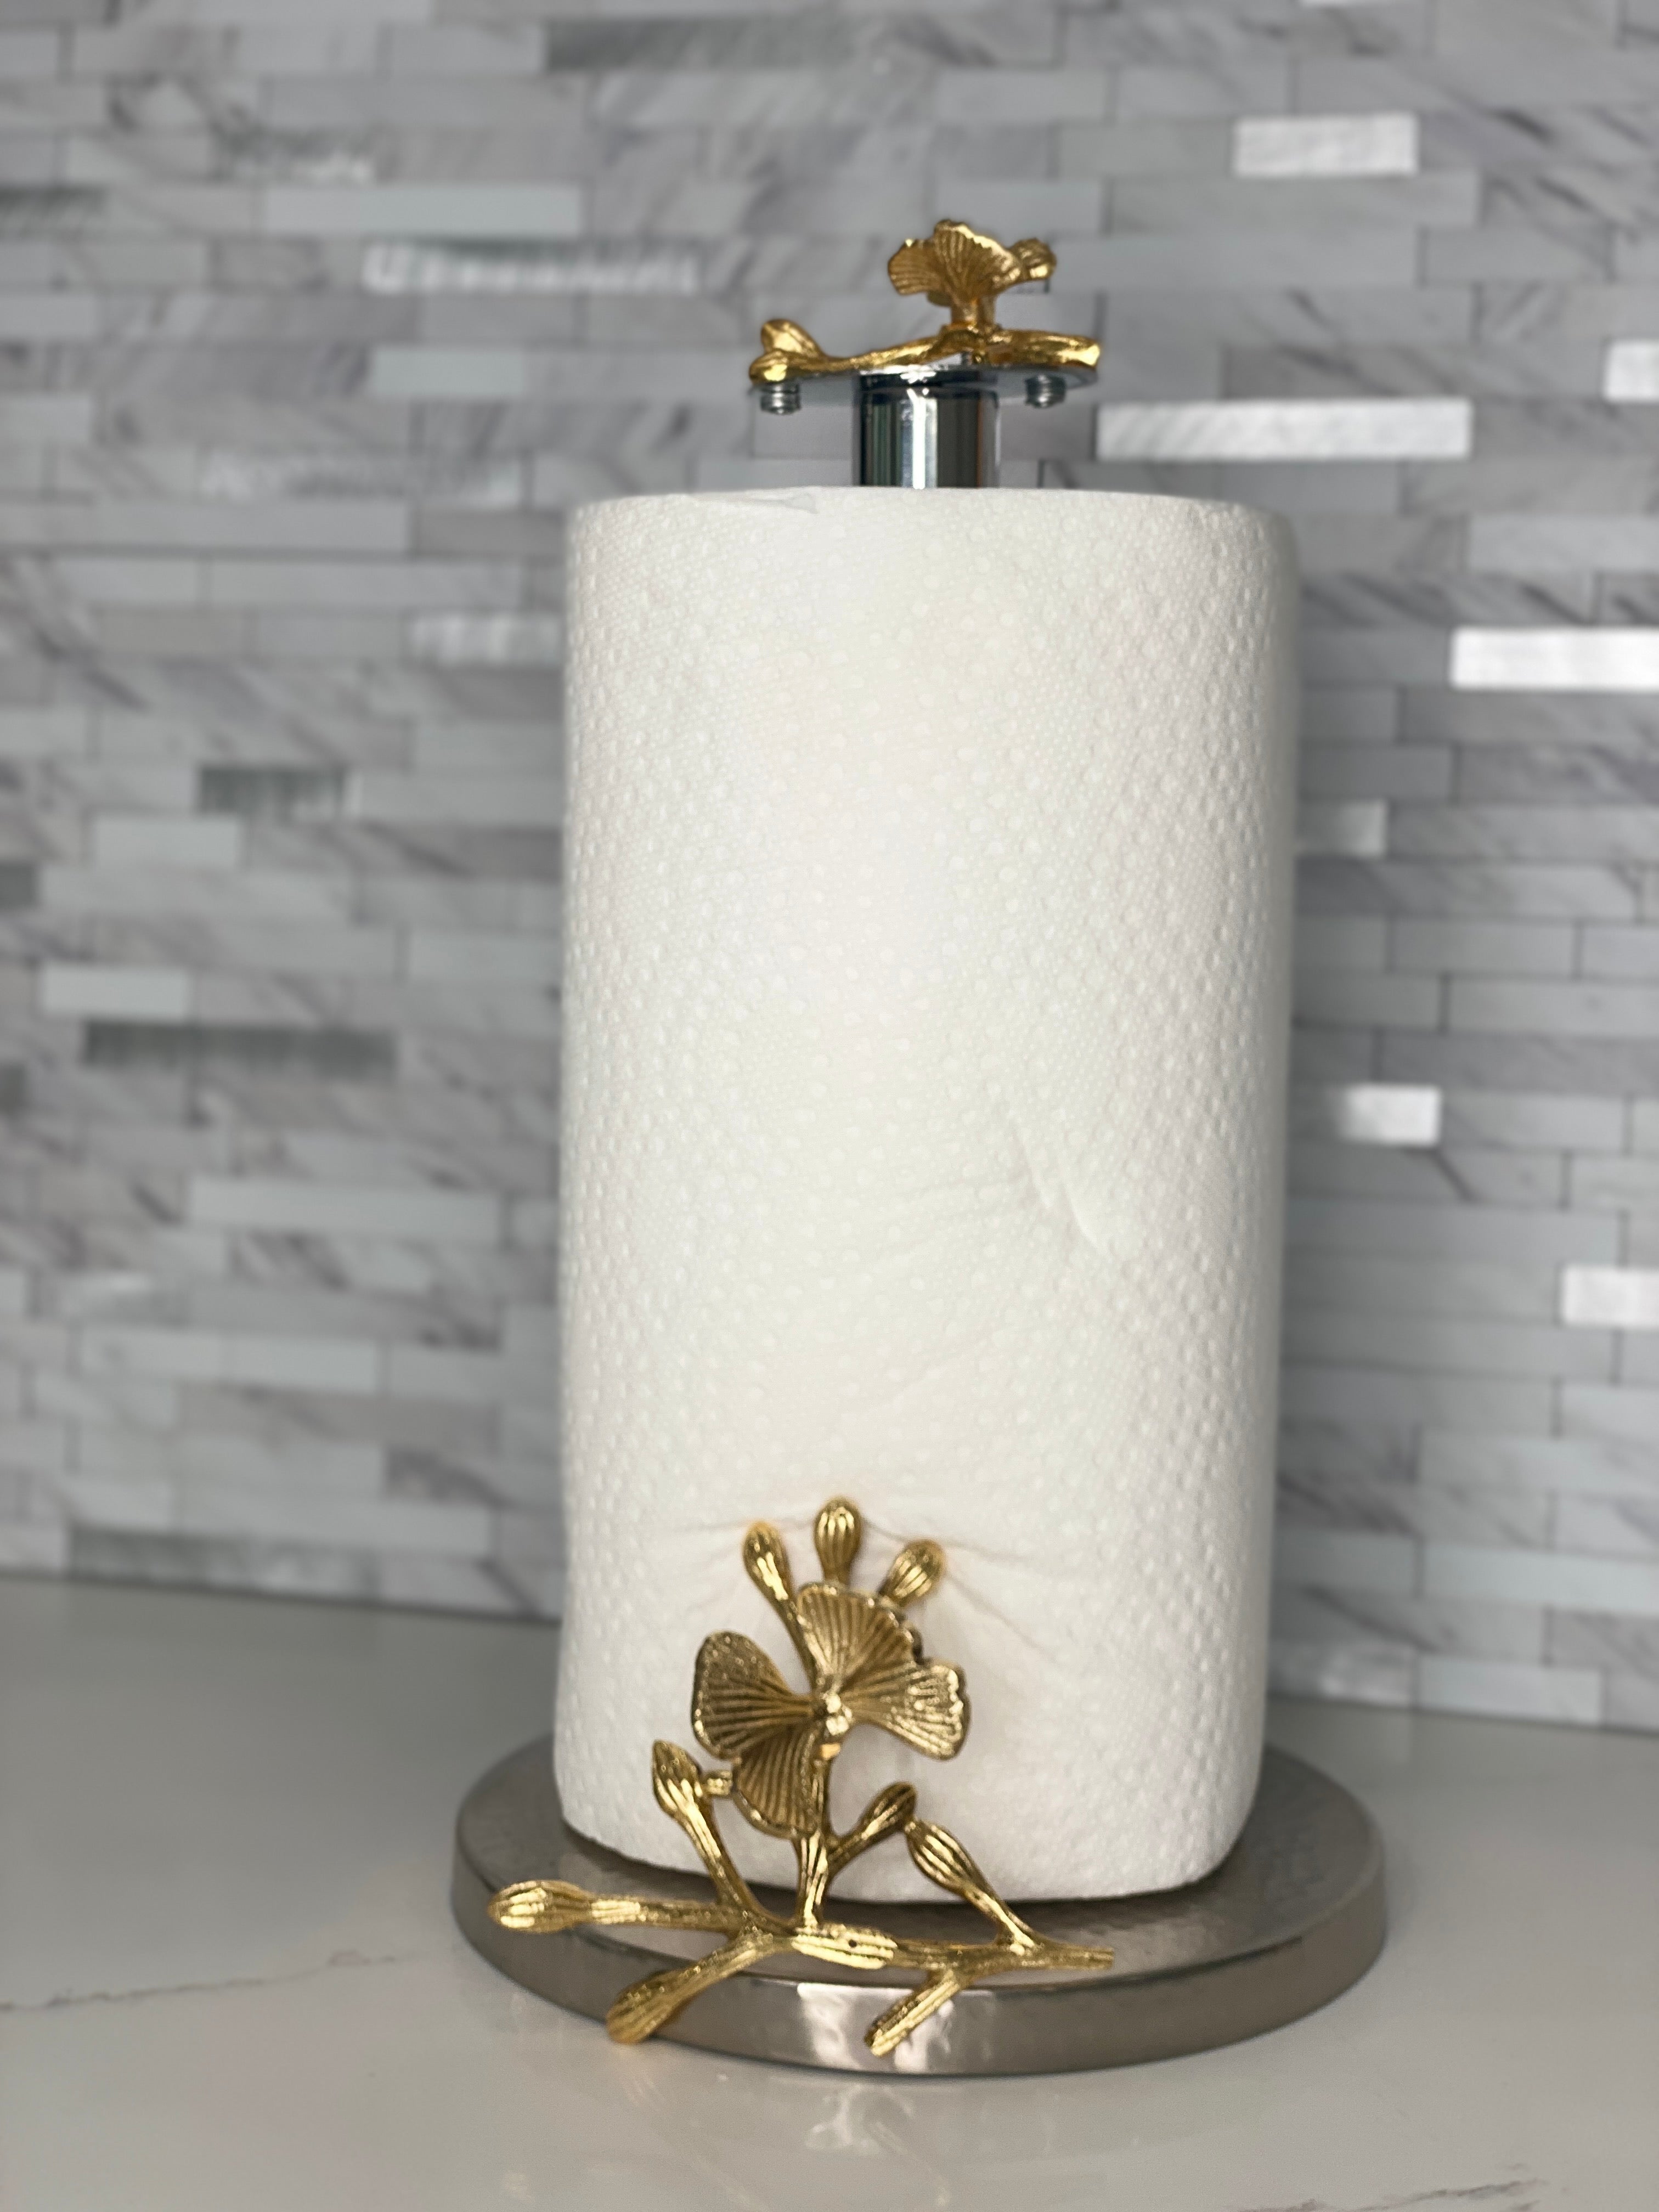 Gold Plated Paper Towel Holder - Buy Online – Sophie and Ella